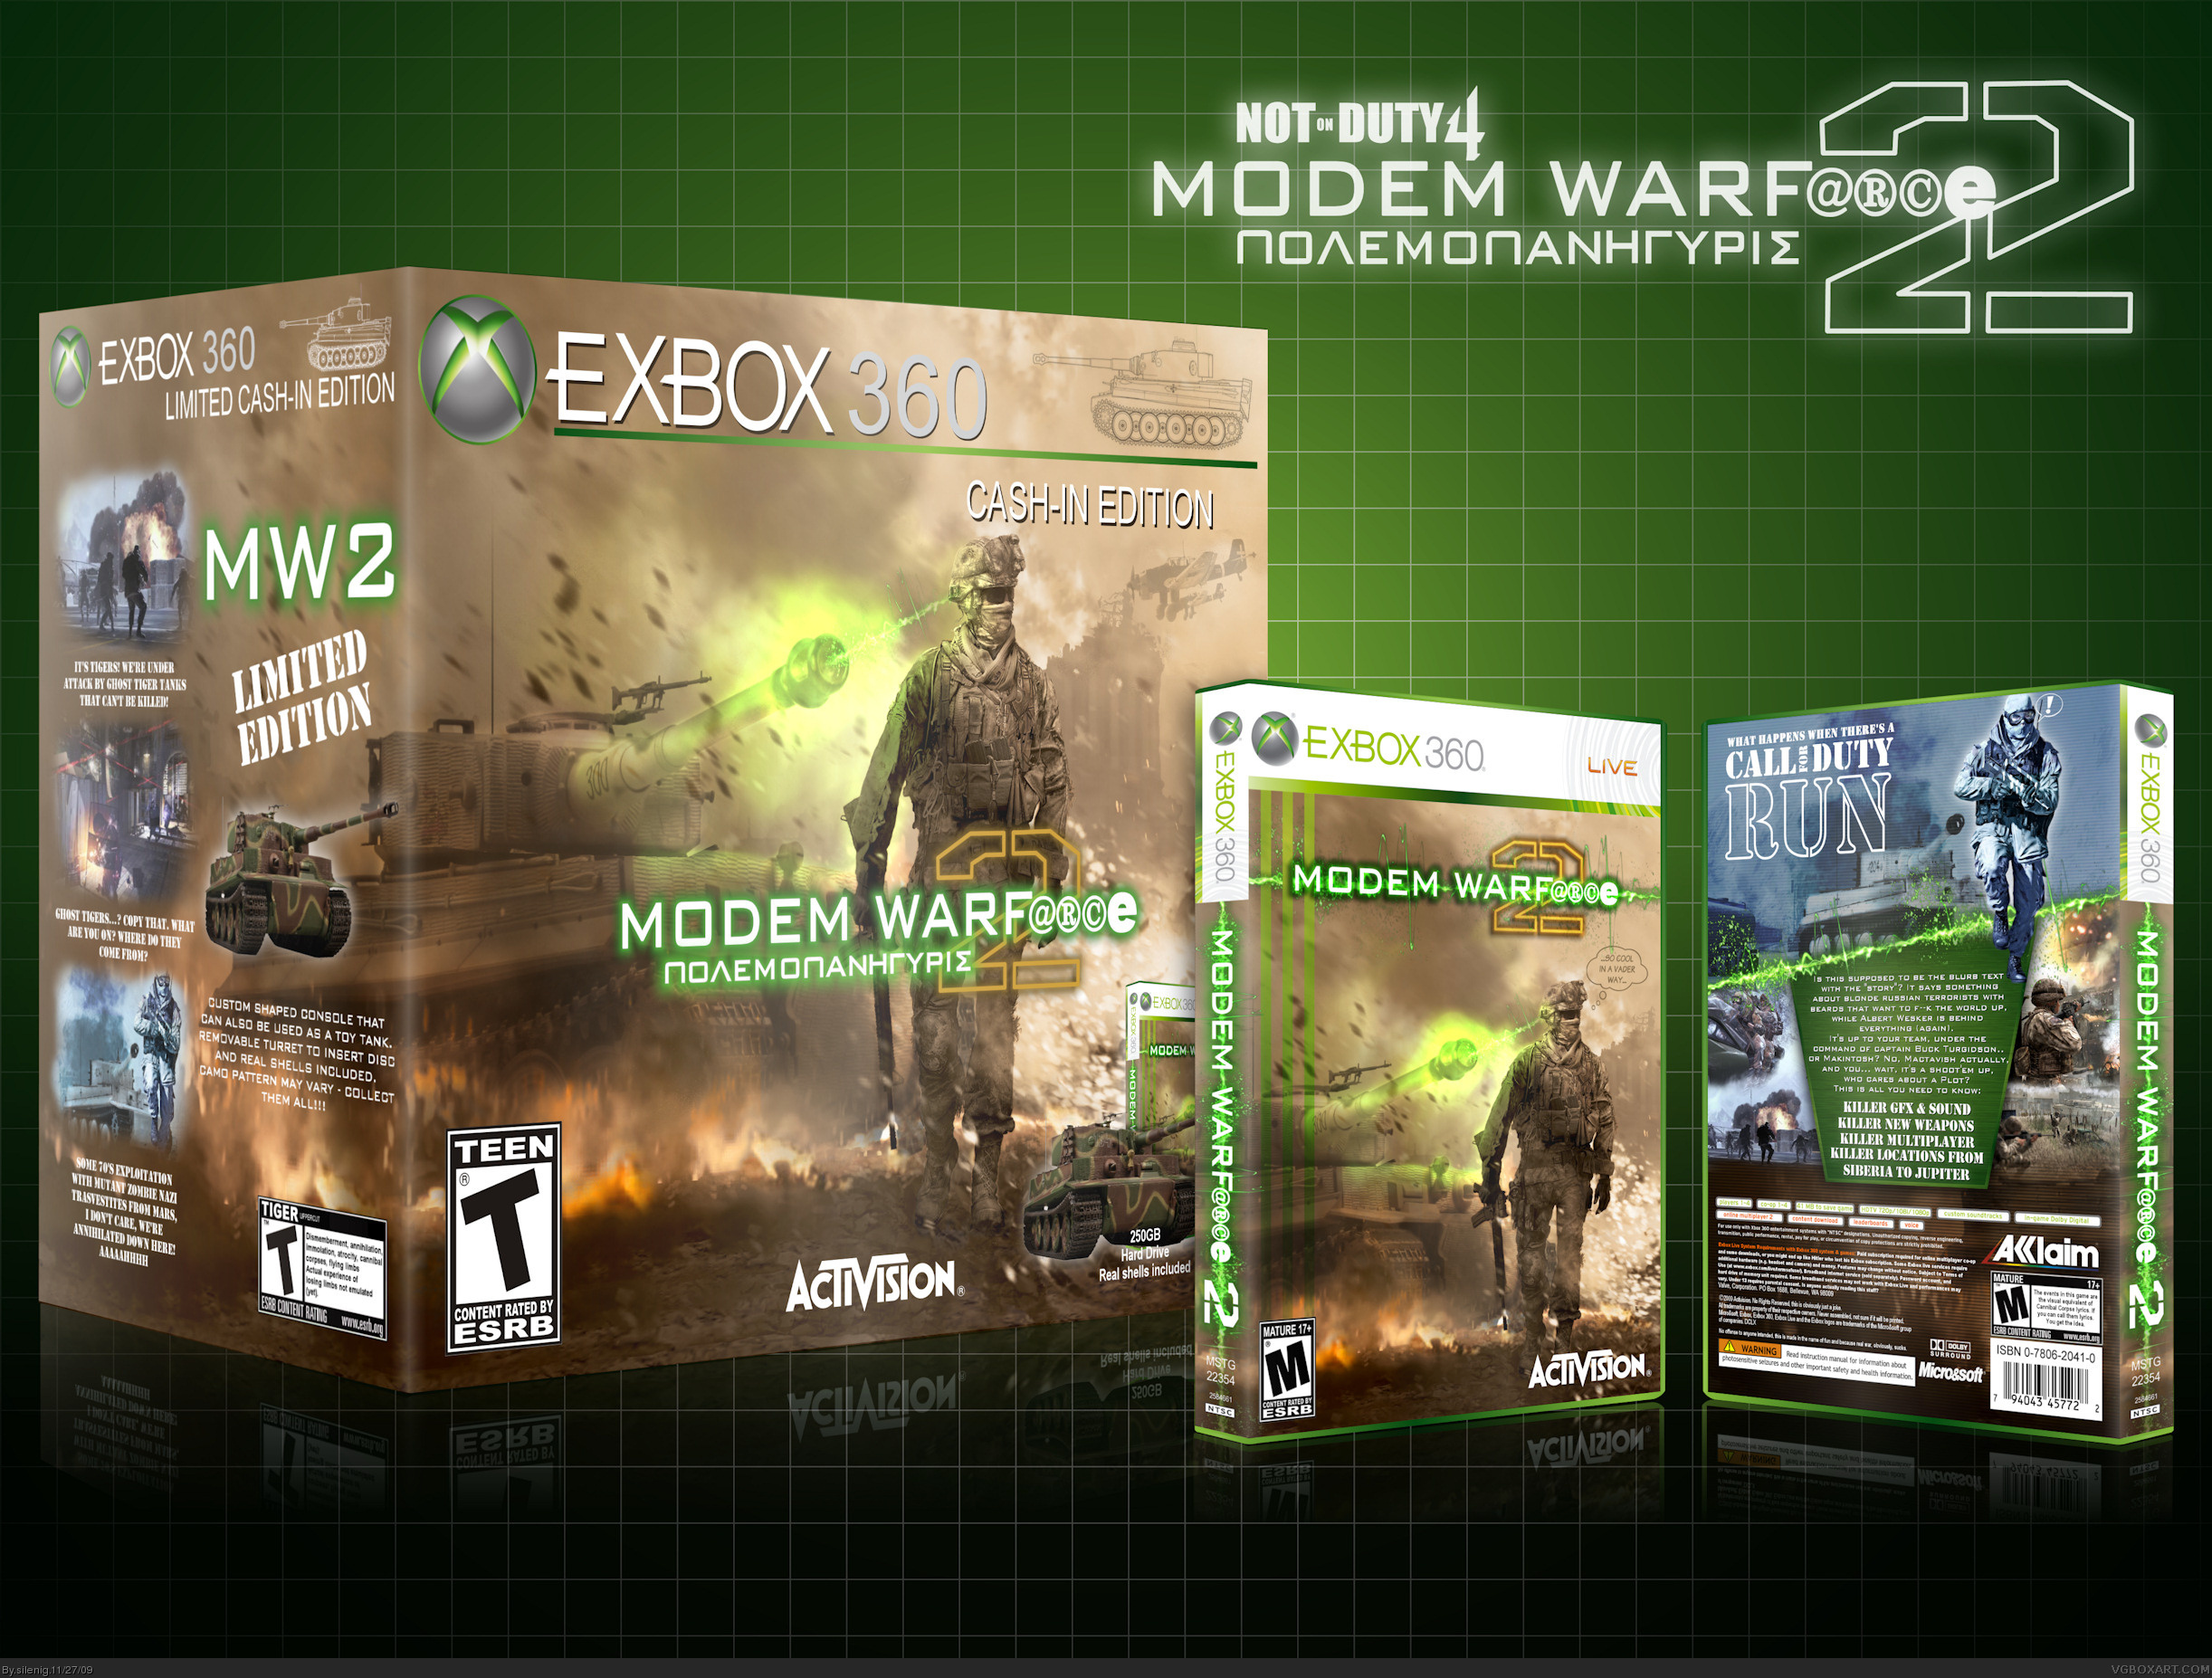 Modem Warfarce 2 box cover